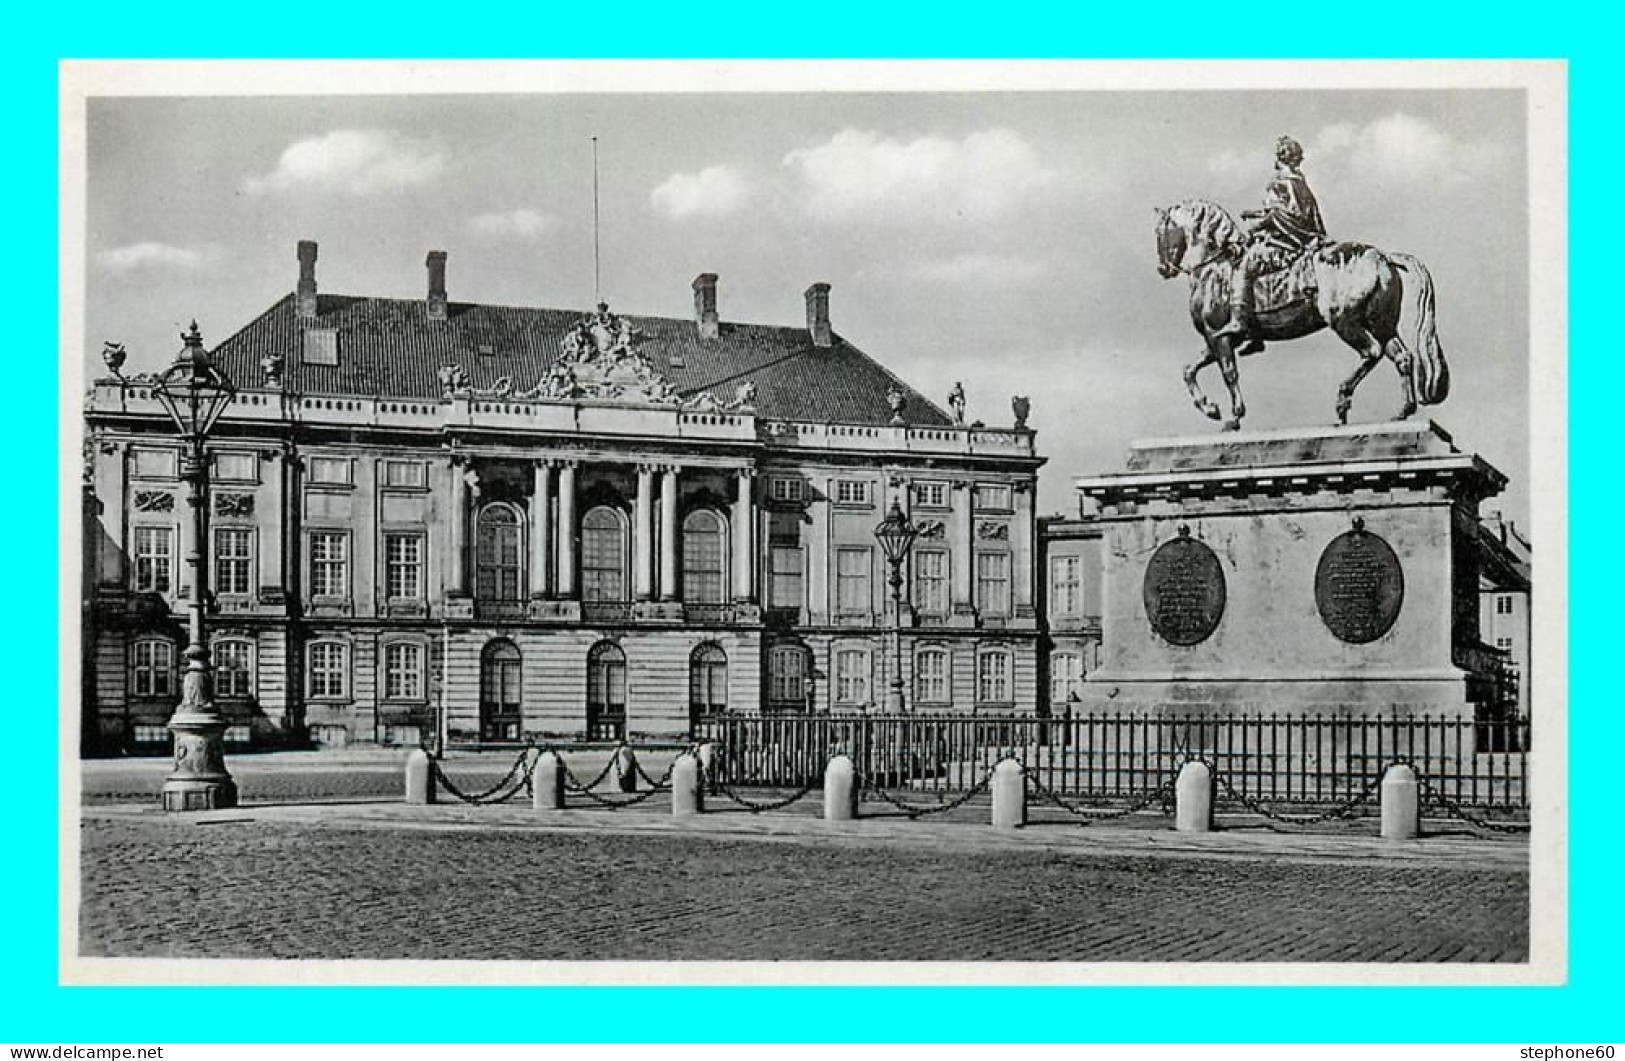 A736 / 299 Danemark Kobenhavn Amalienborg Palace With The Equestrian Statue - Danemark